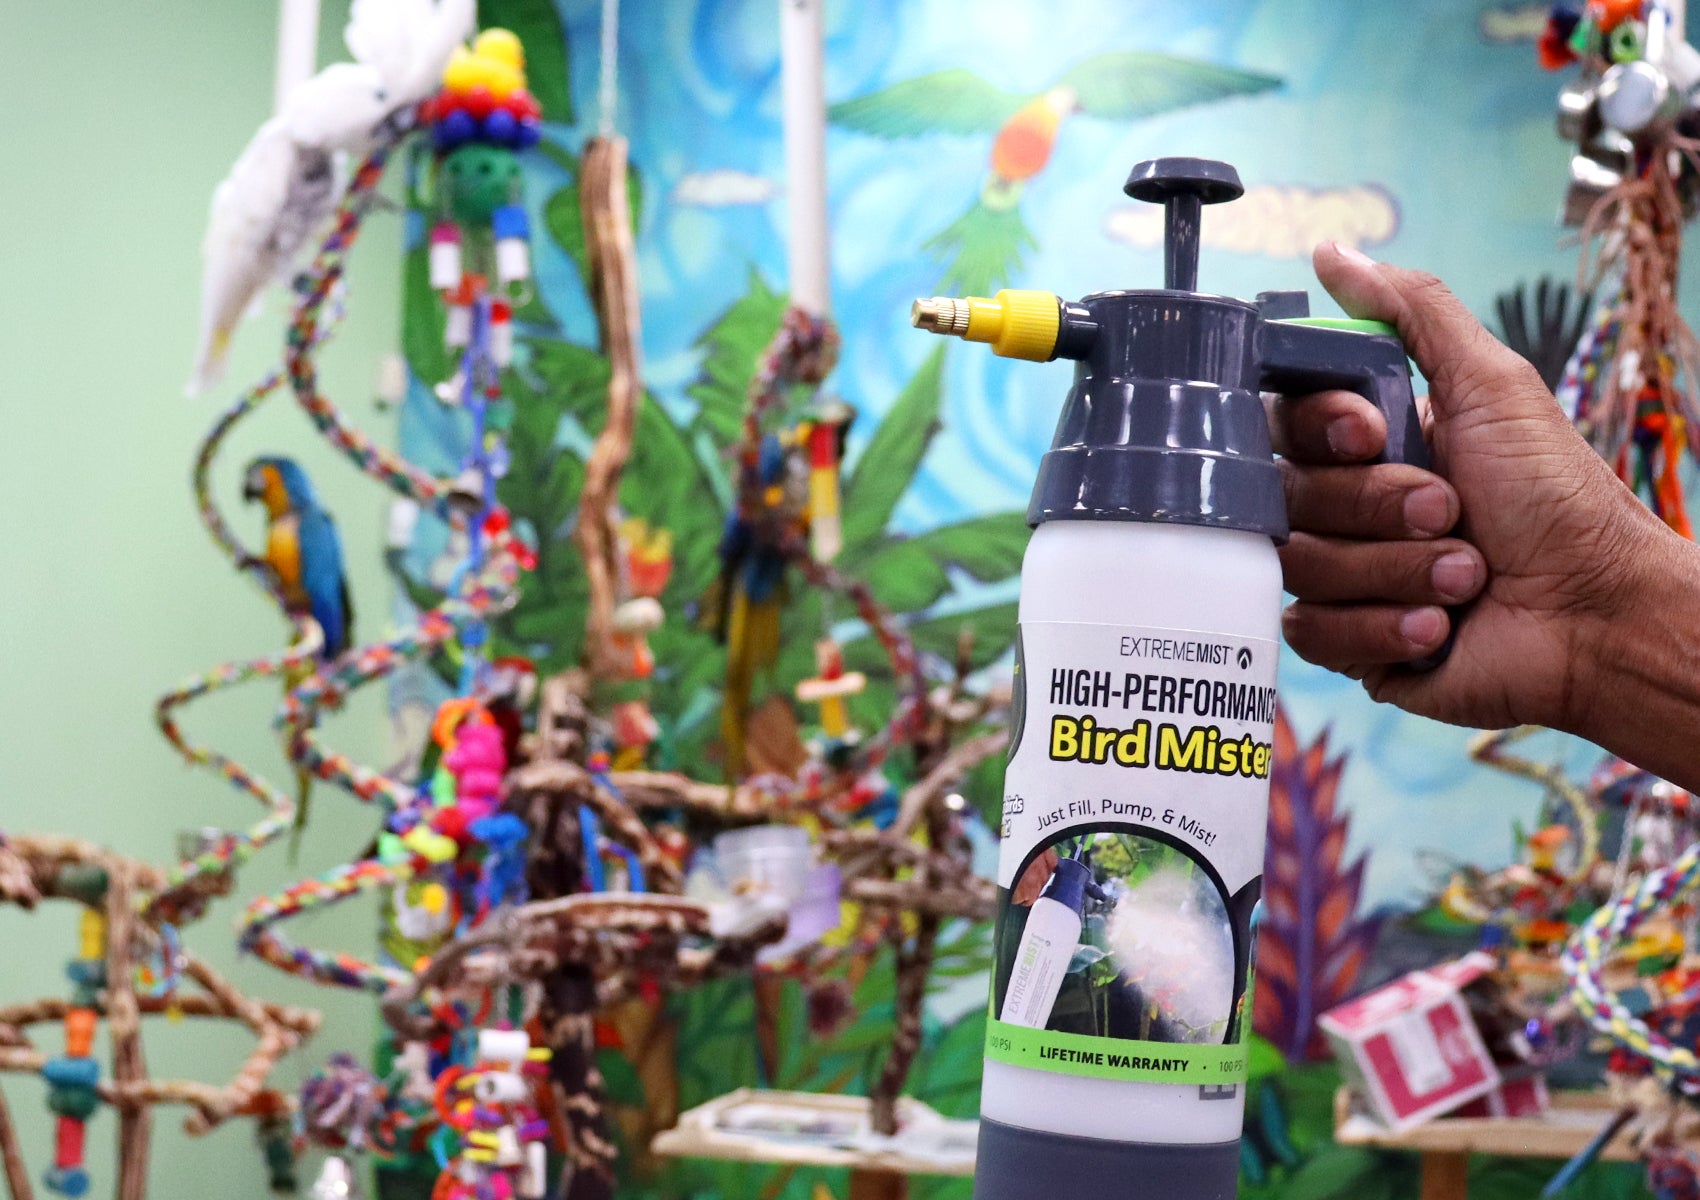 bird mister pump-up sprayer pointed at white cockatoo